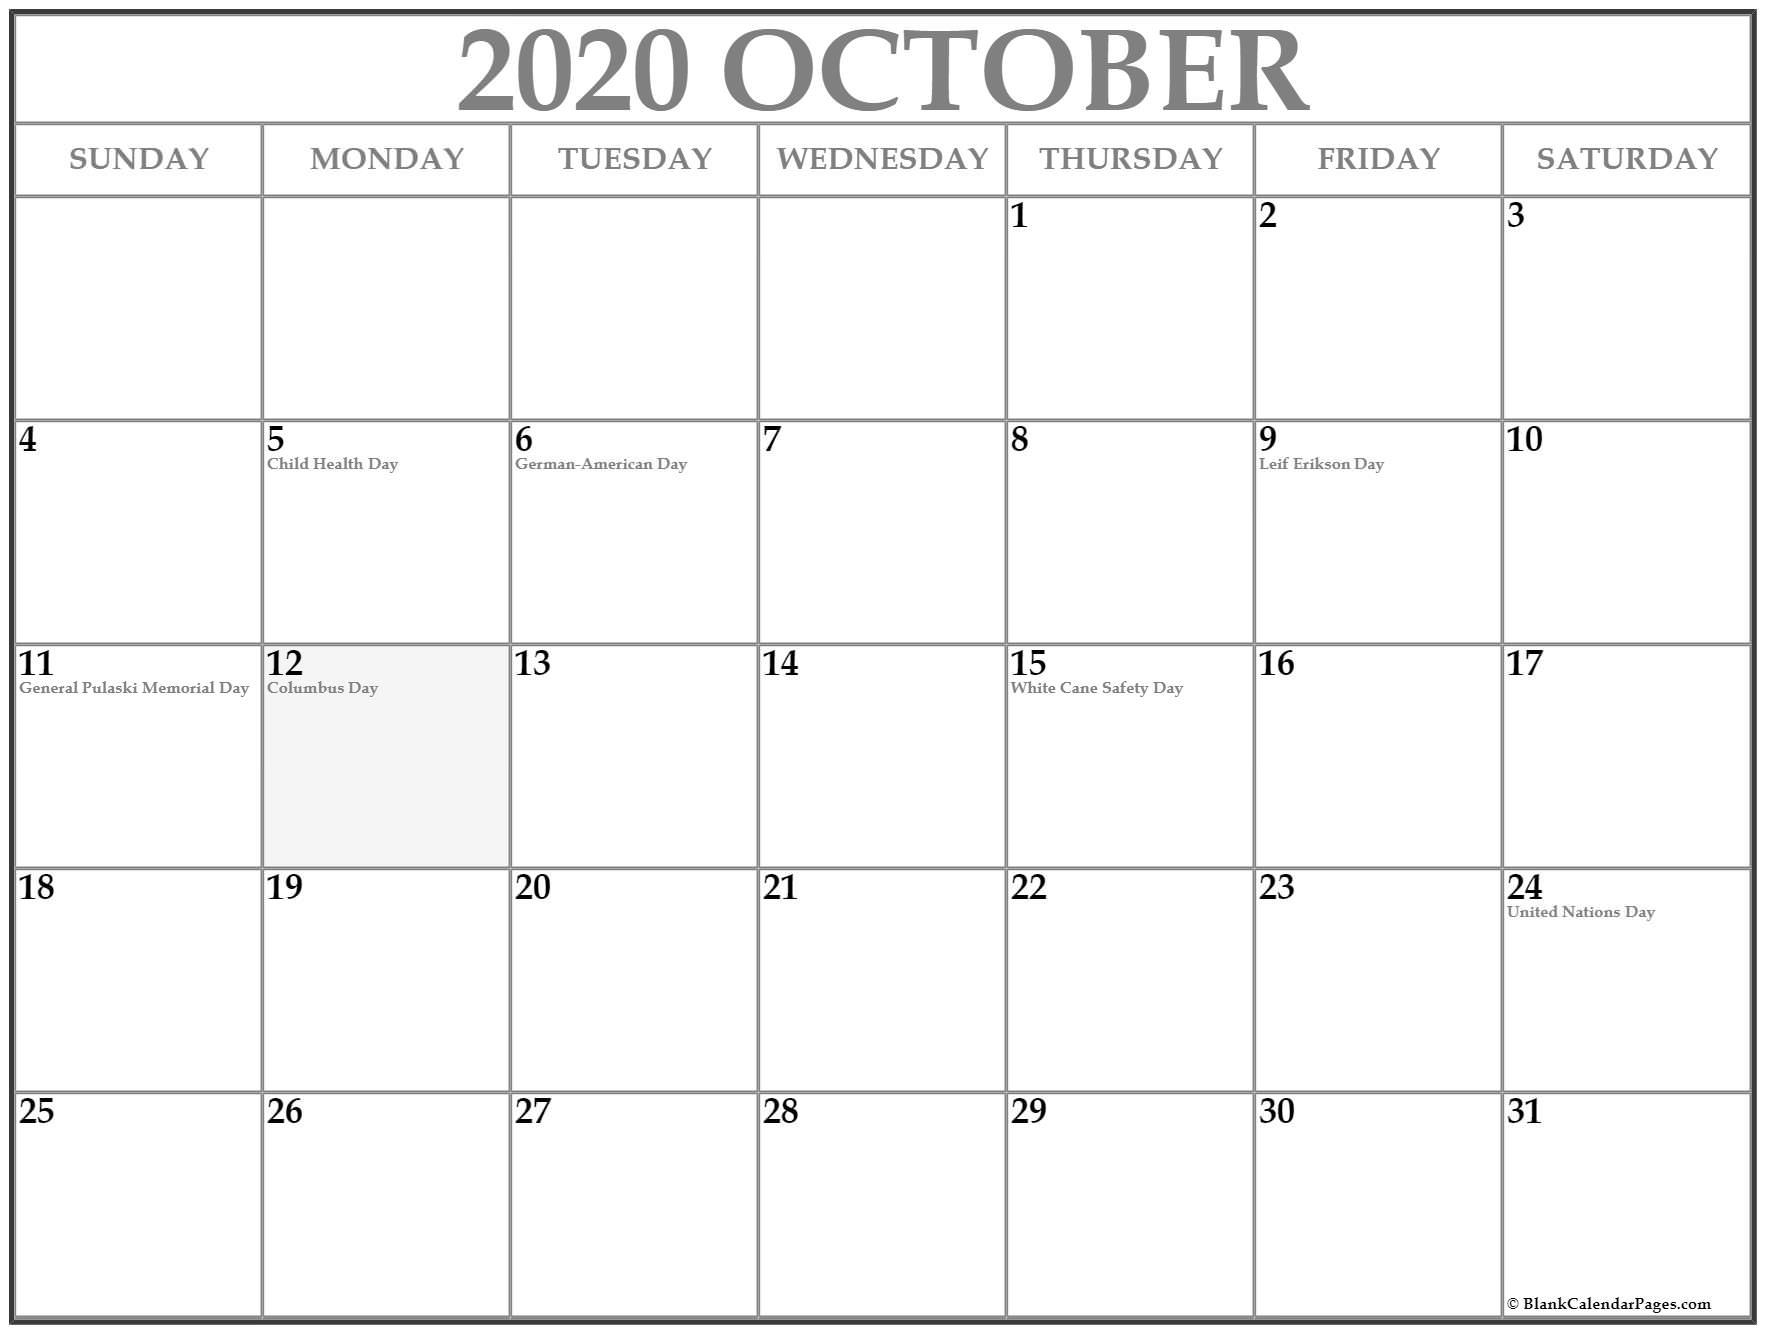 Columbus Day 2020 Usa  Themediocremama in Uc Berkeley Calendar 2020-2020